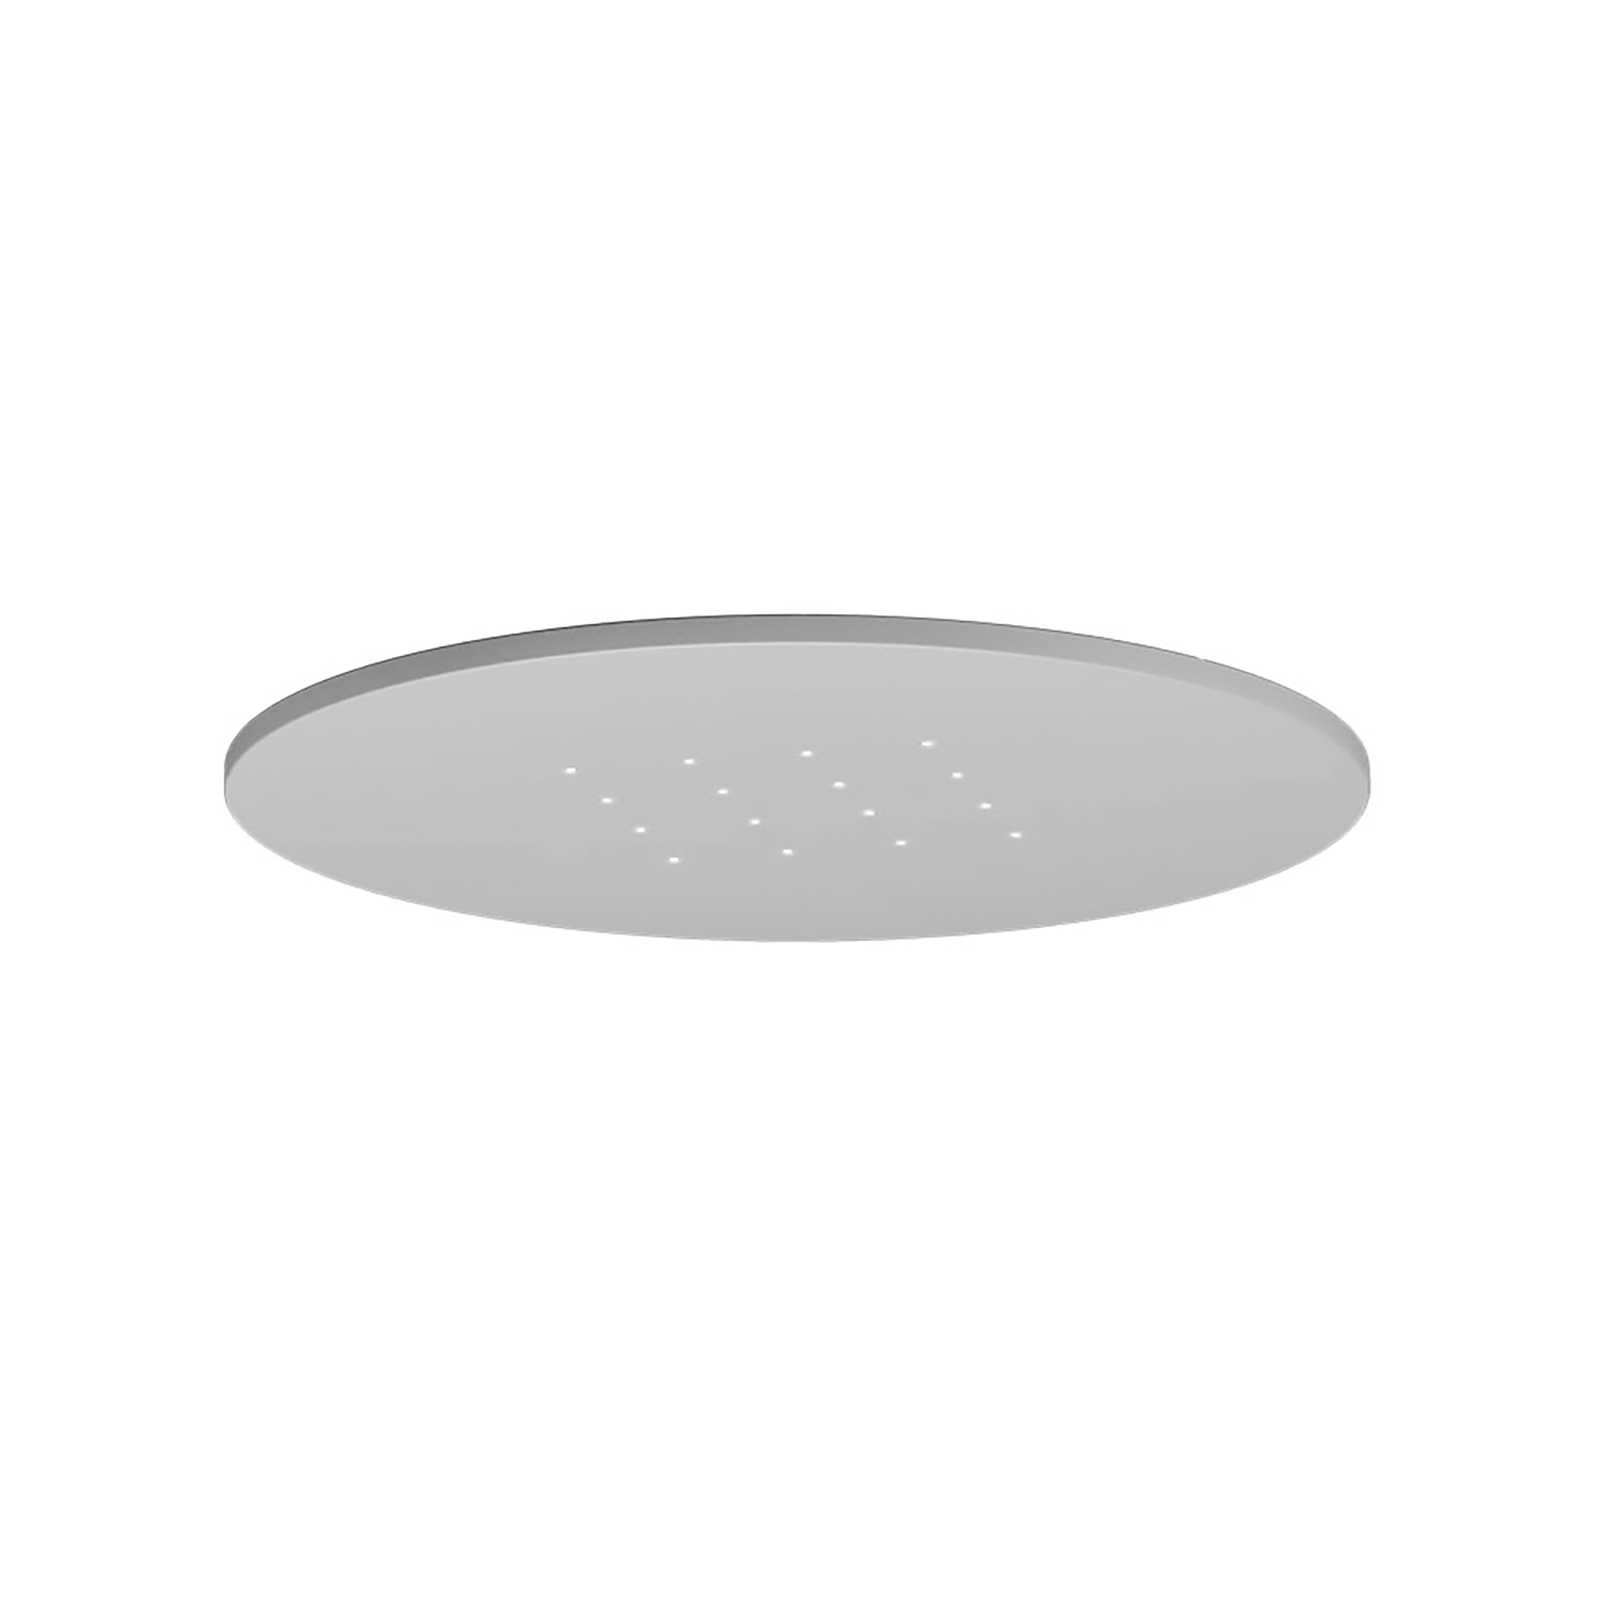 LEDWORKS Sono-LED Round 16 Decke 930 38° weiß